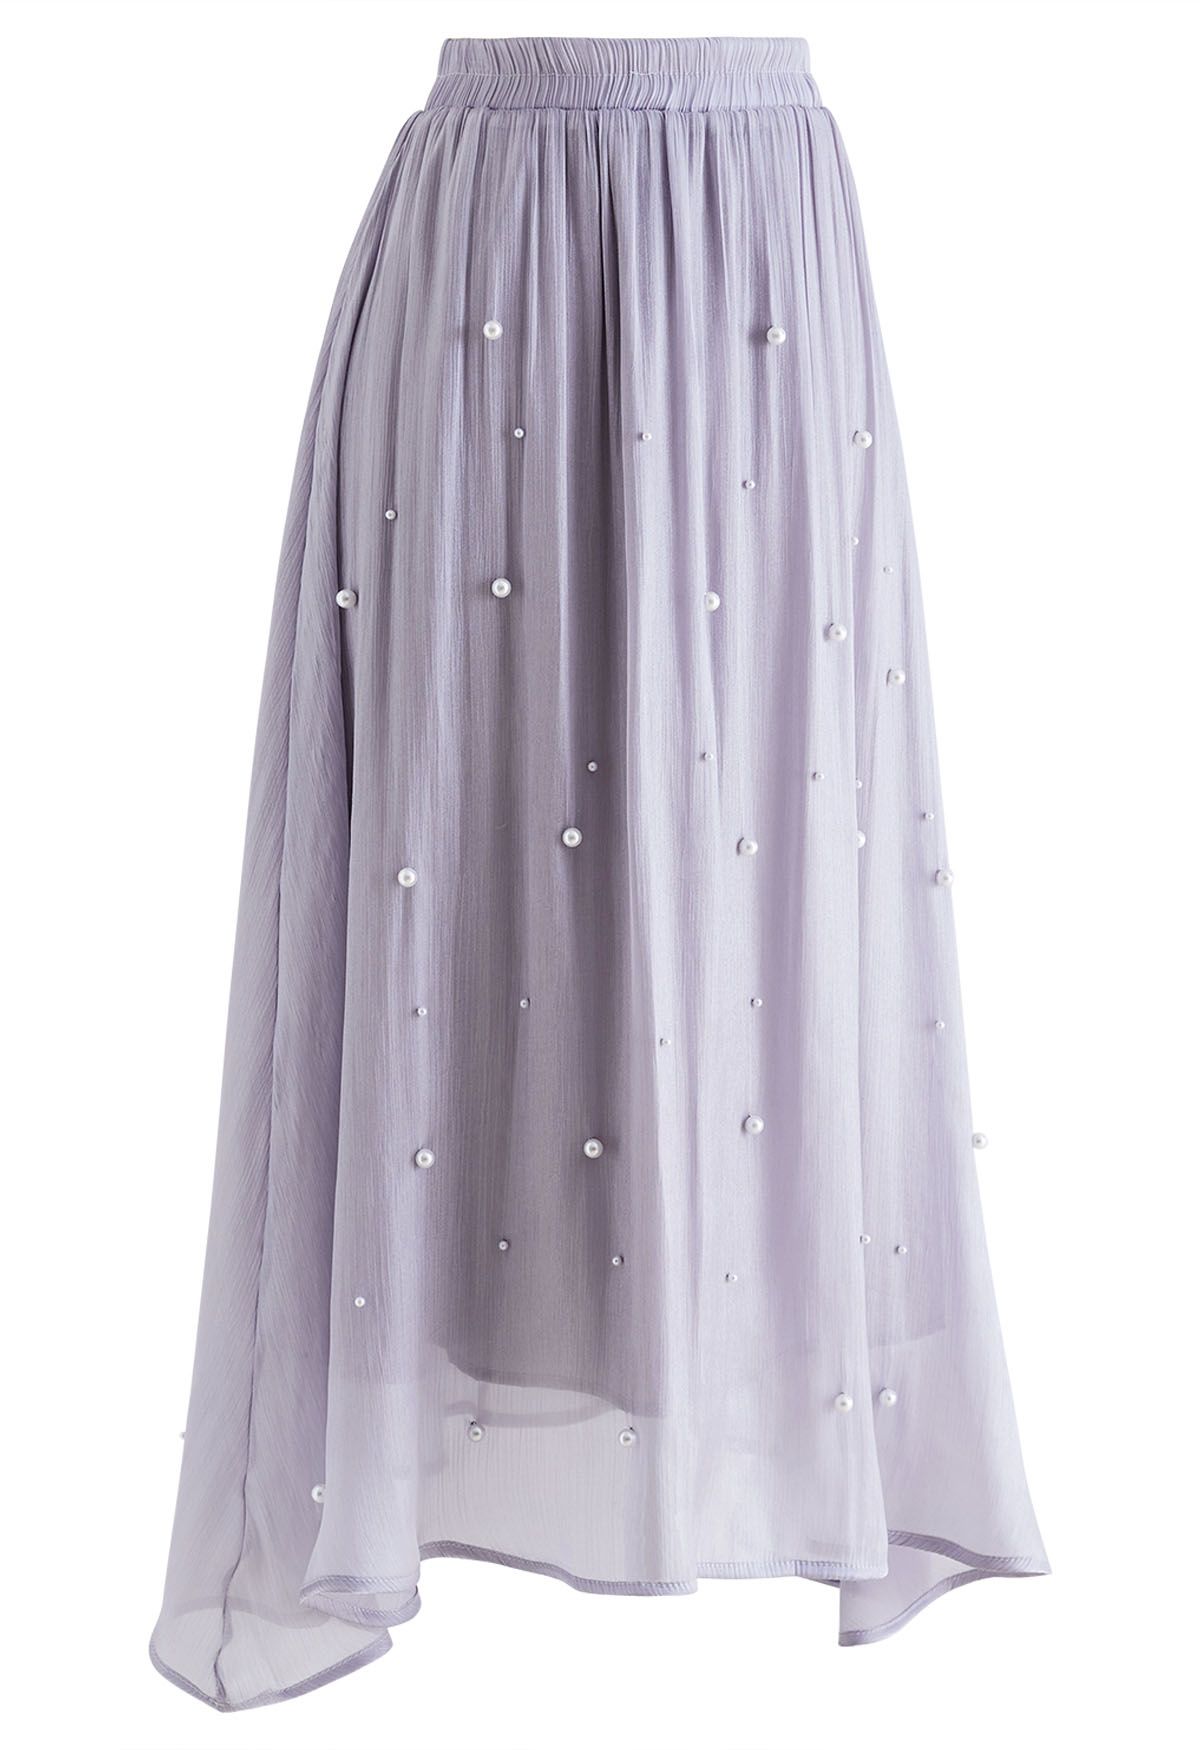 Irregular Pearl Shimmer Chiffon Skirt in Lavender